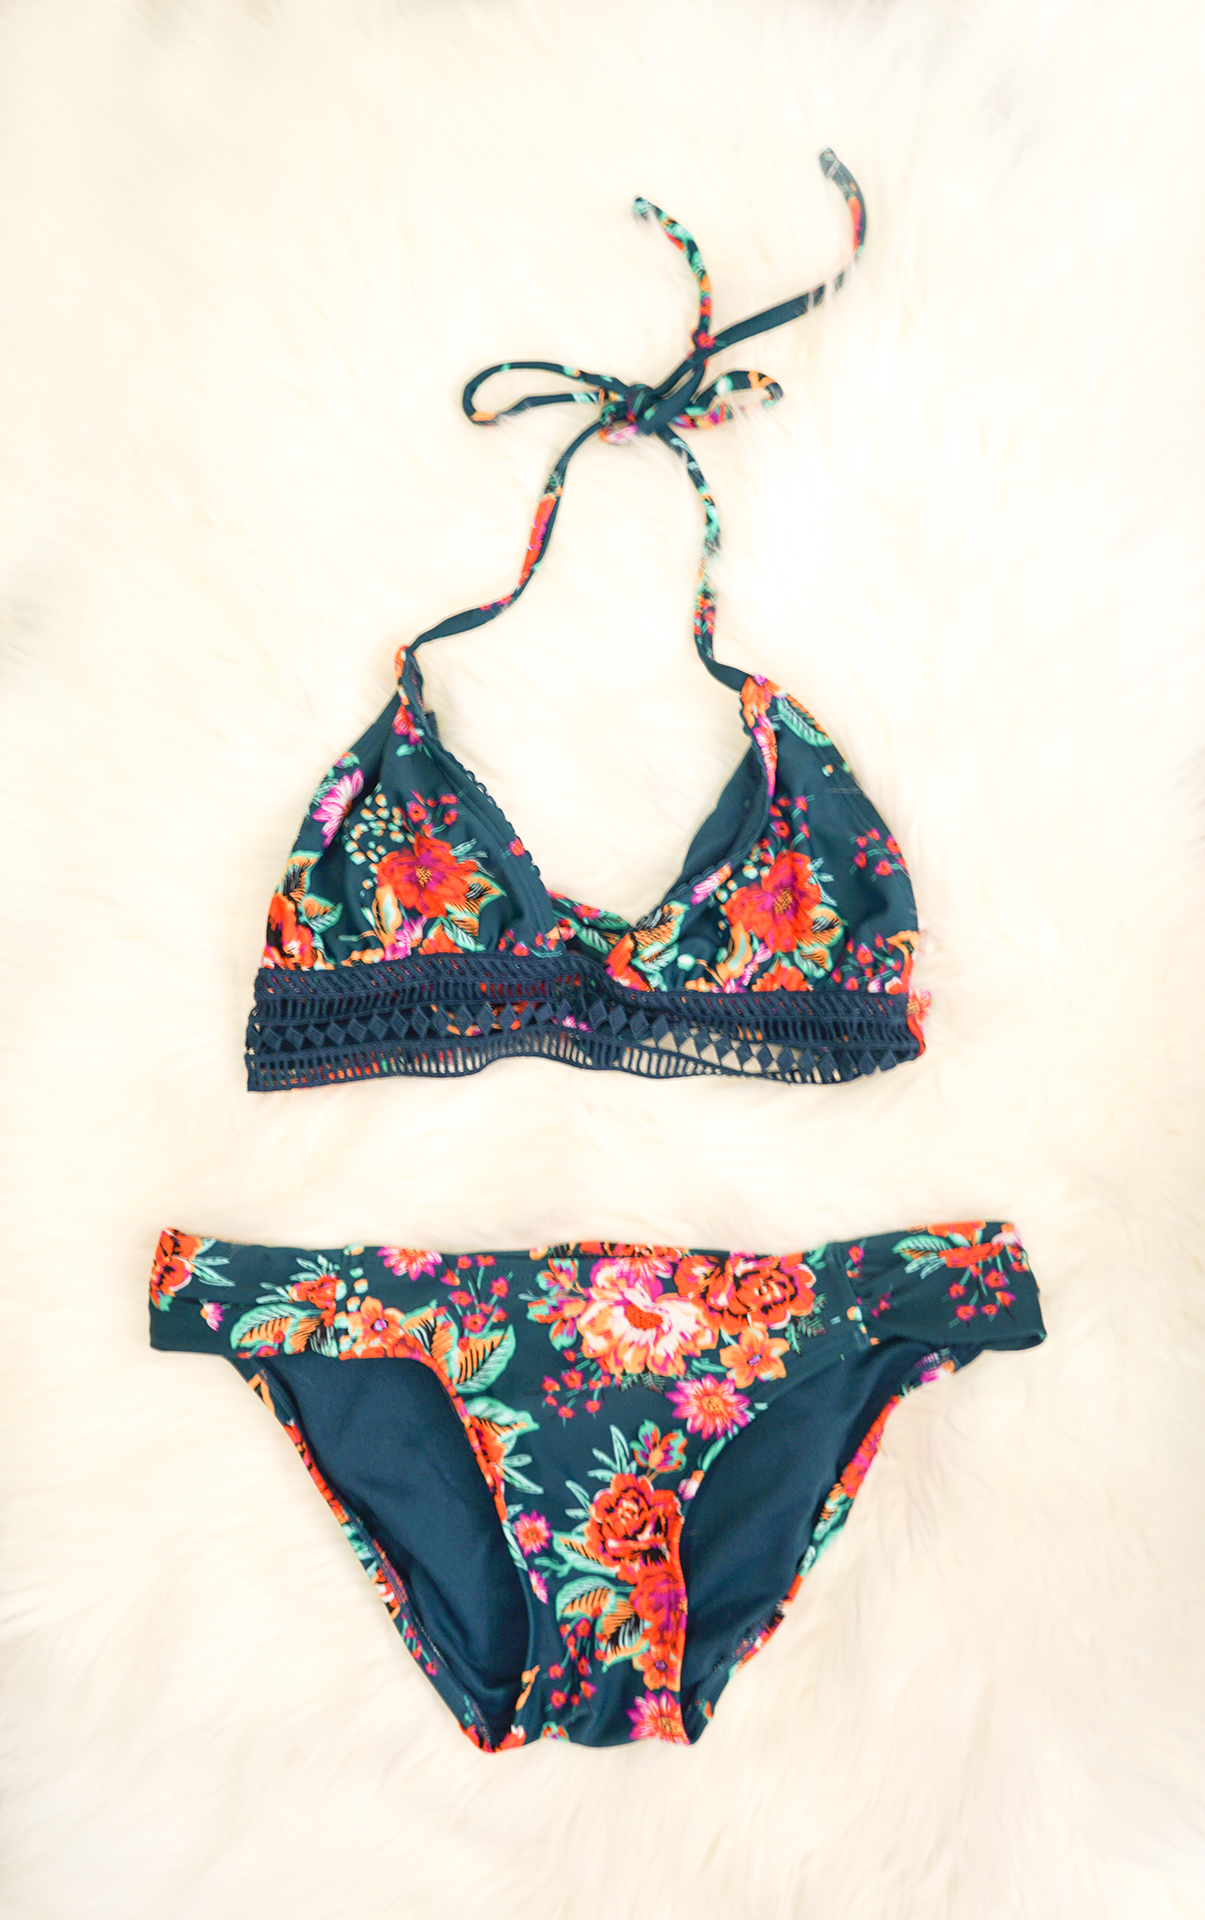 Luana Lani’s Summer Bikinis | Luana Lani